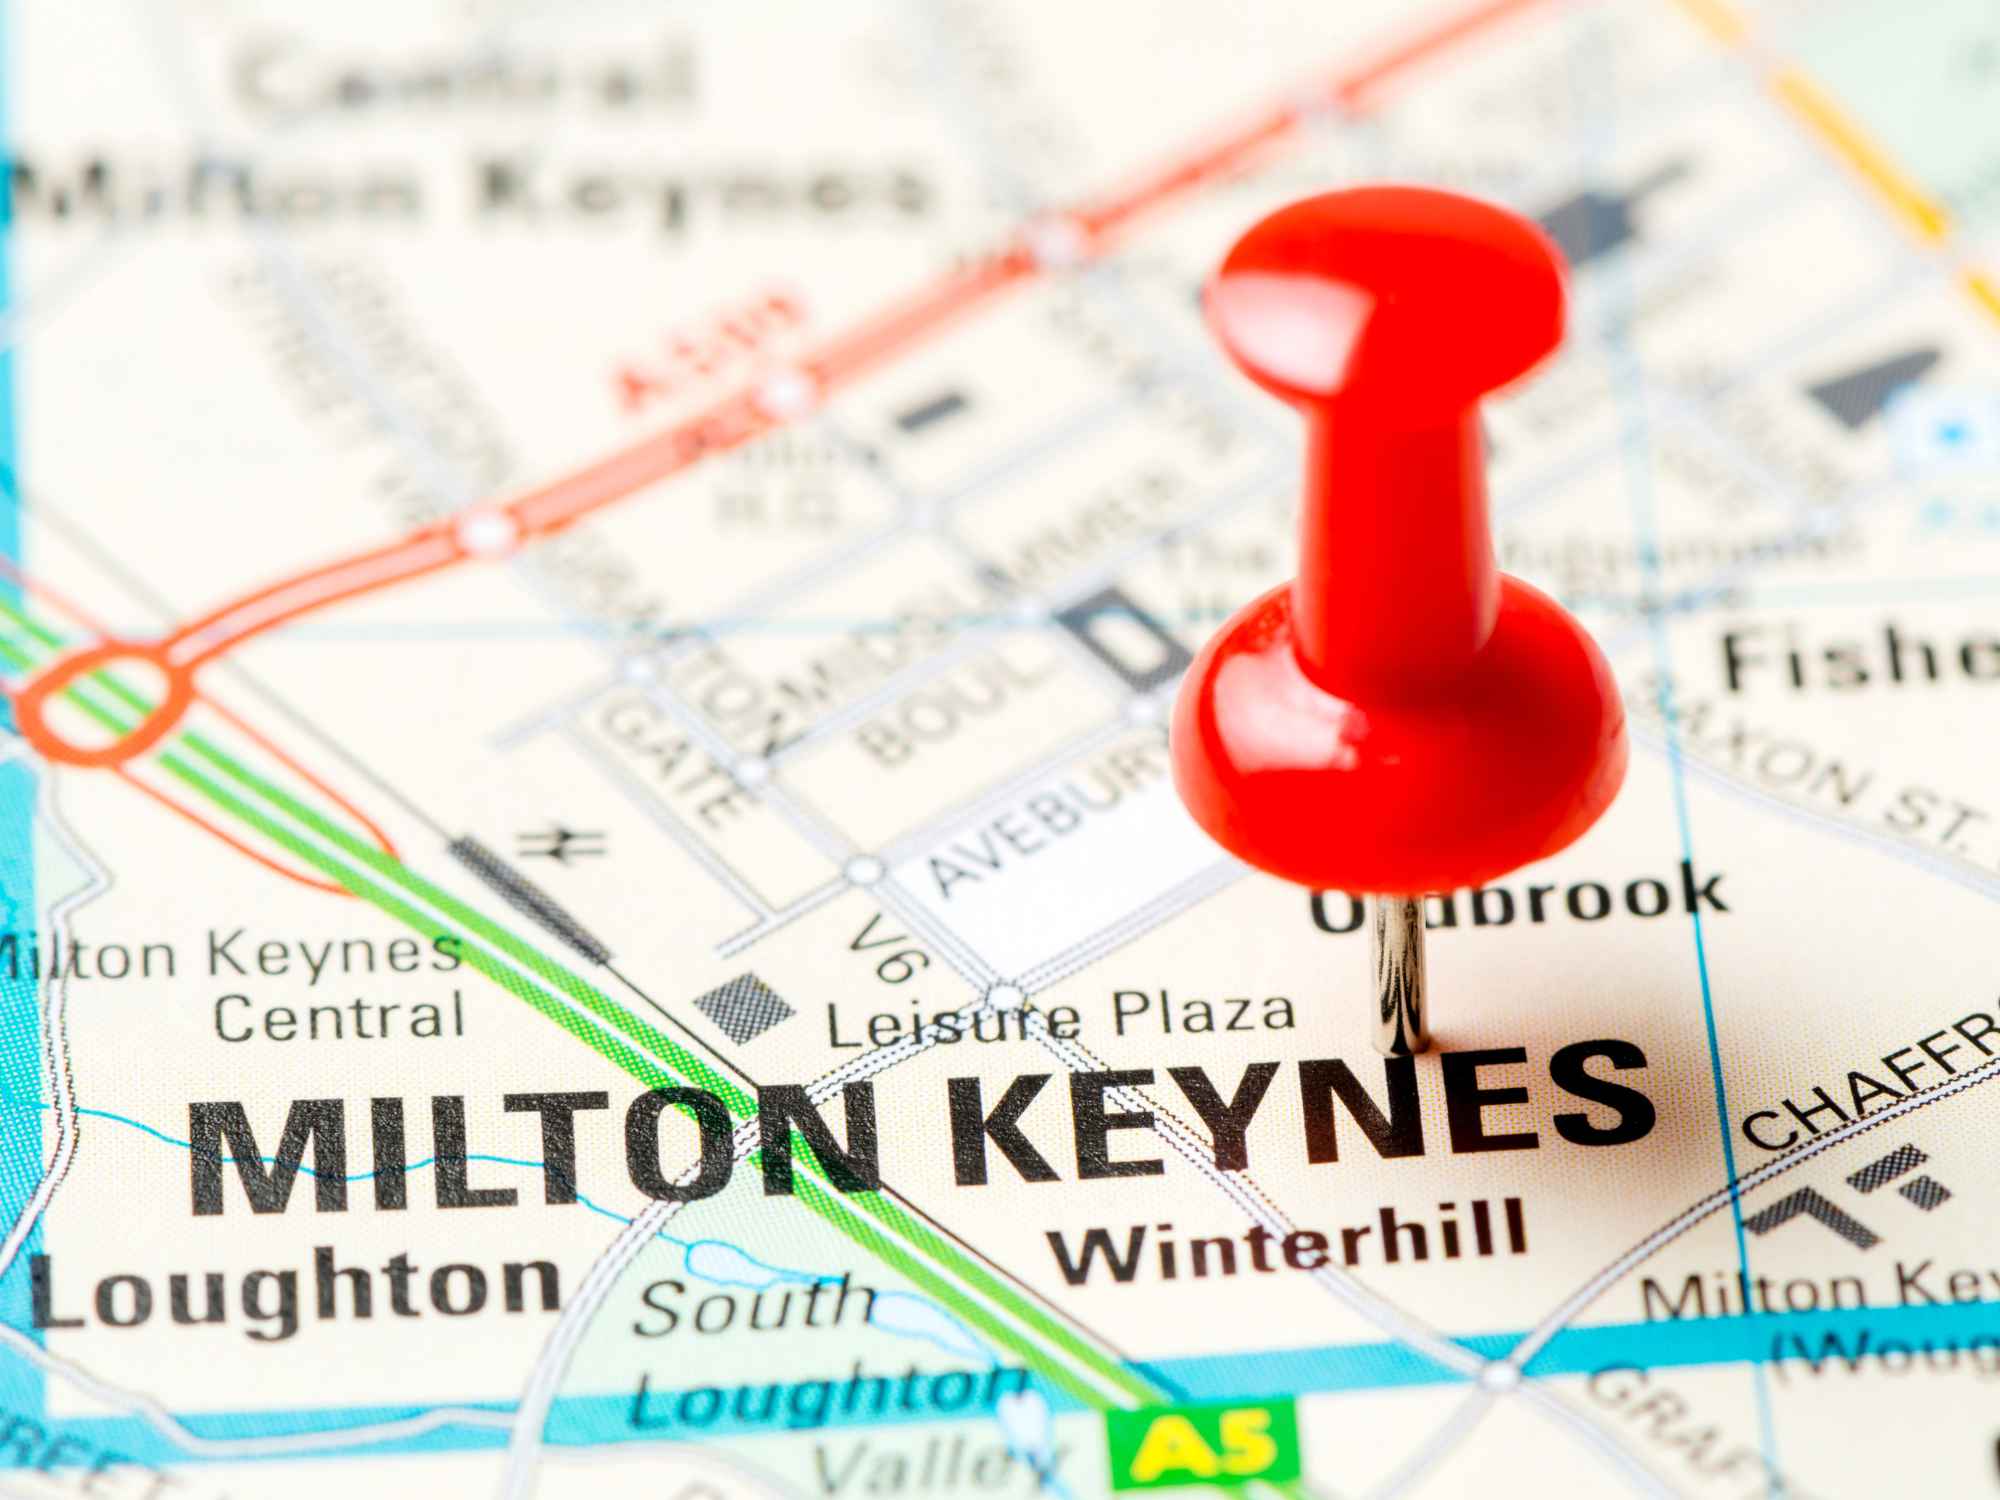 Cheap Hen Party Destinations - Milton Keynes